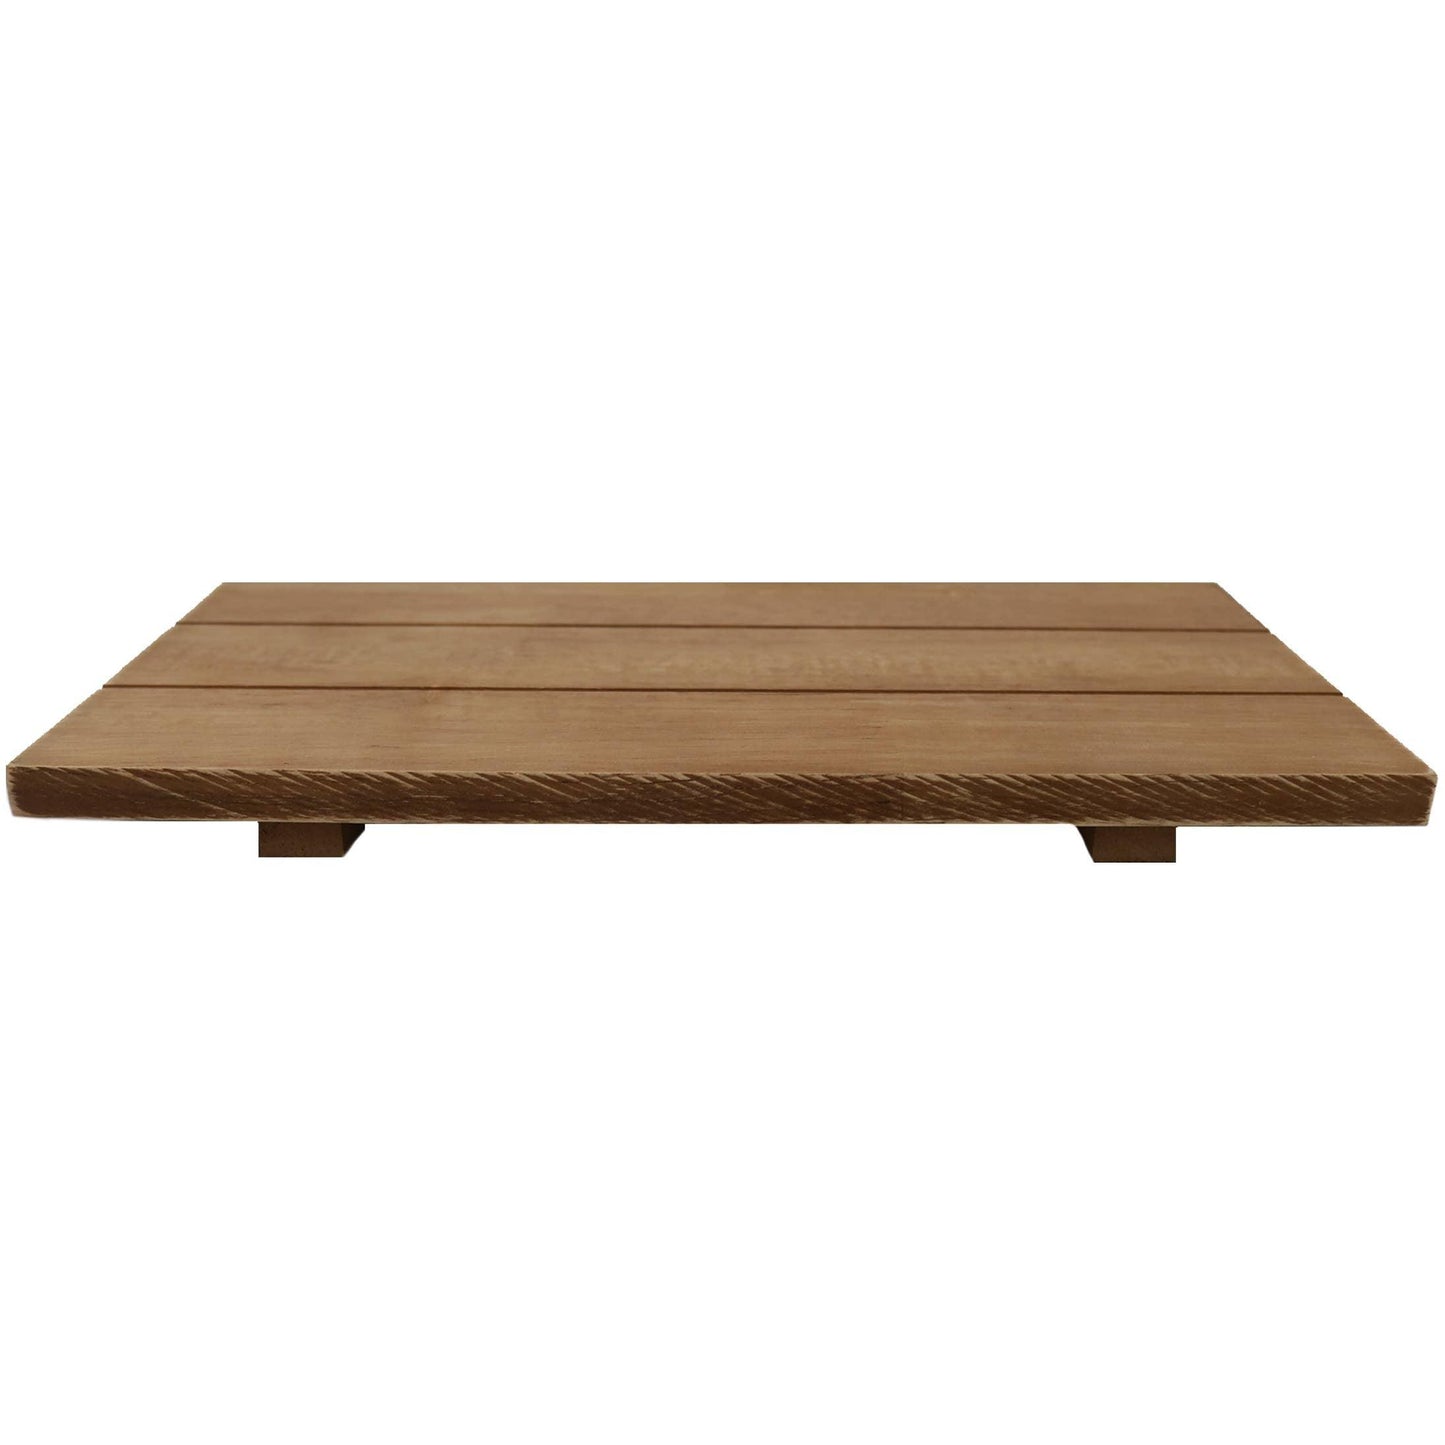 Rectangular Wood Tray - Natural - 9x4.75" - The Silver Dahlia